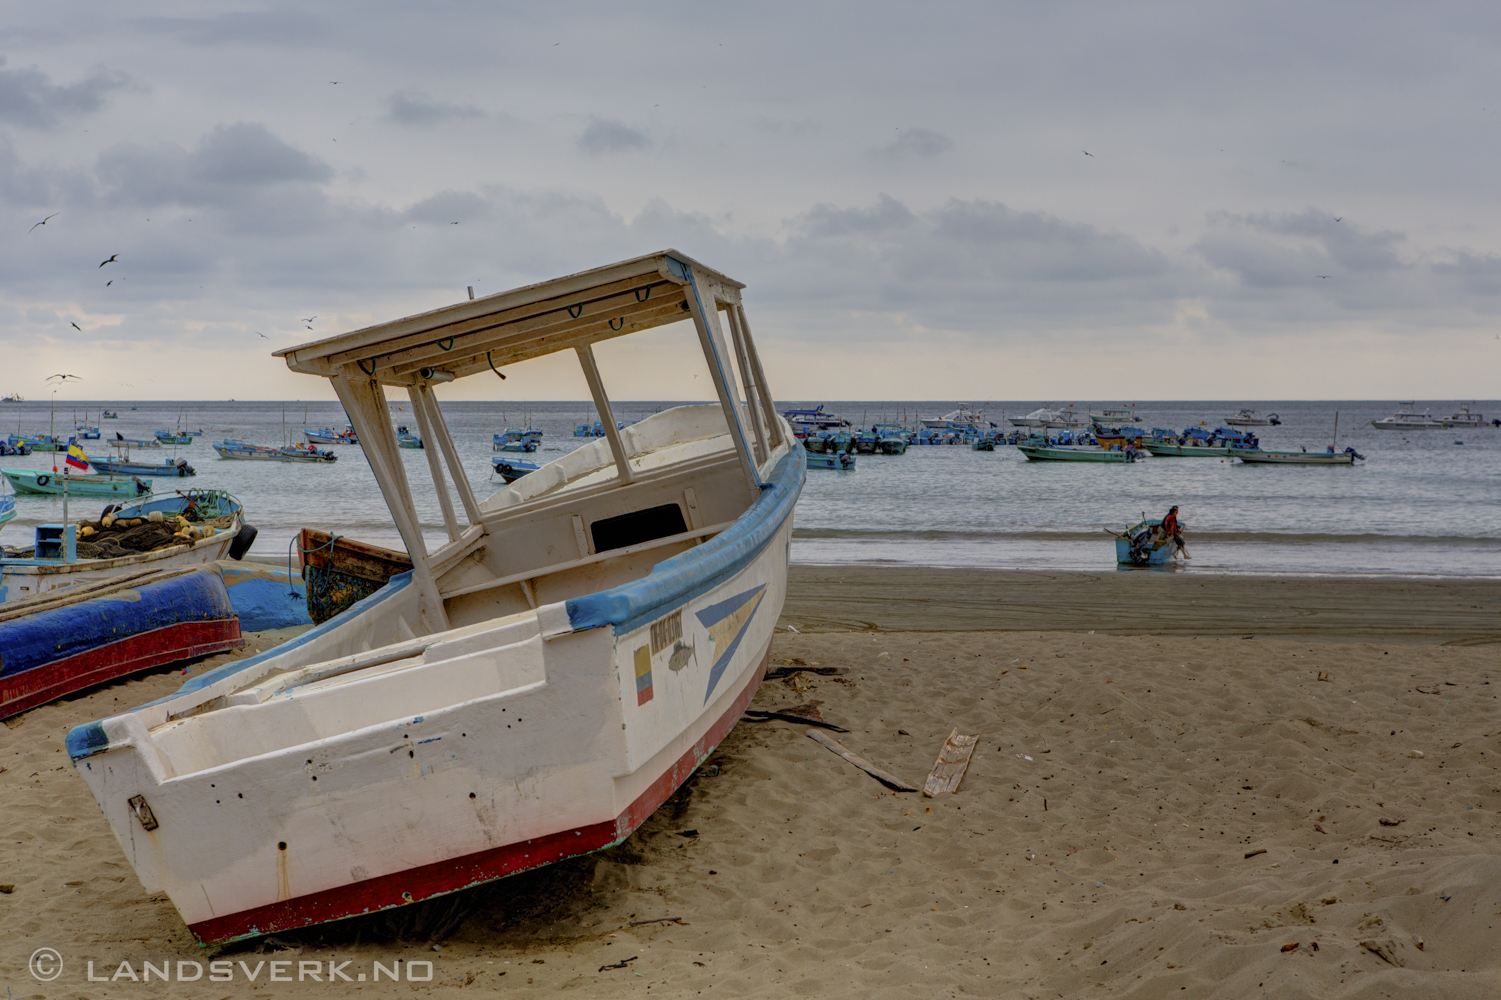 Puerto Lopez, Ecuador. 

(Canon EOS 5D Mark III / Canon EF 24-70mm f/2.8 L USM)